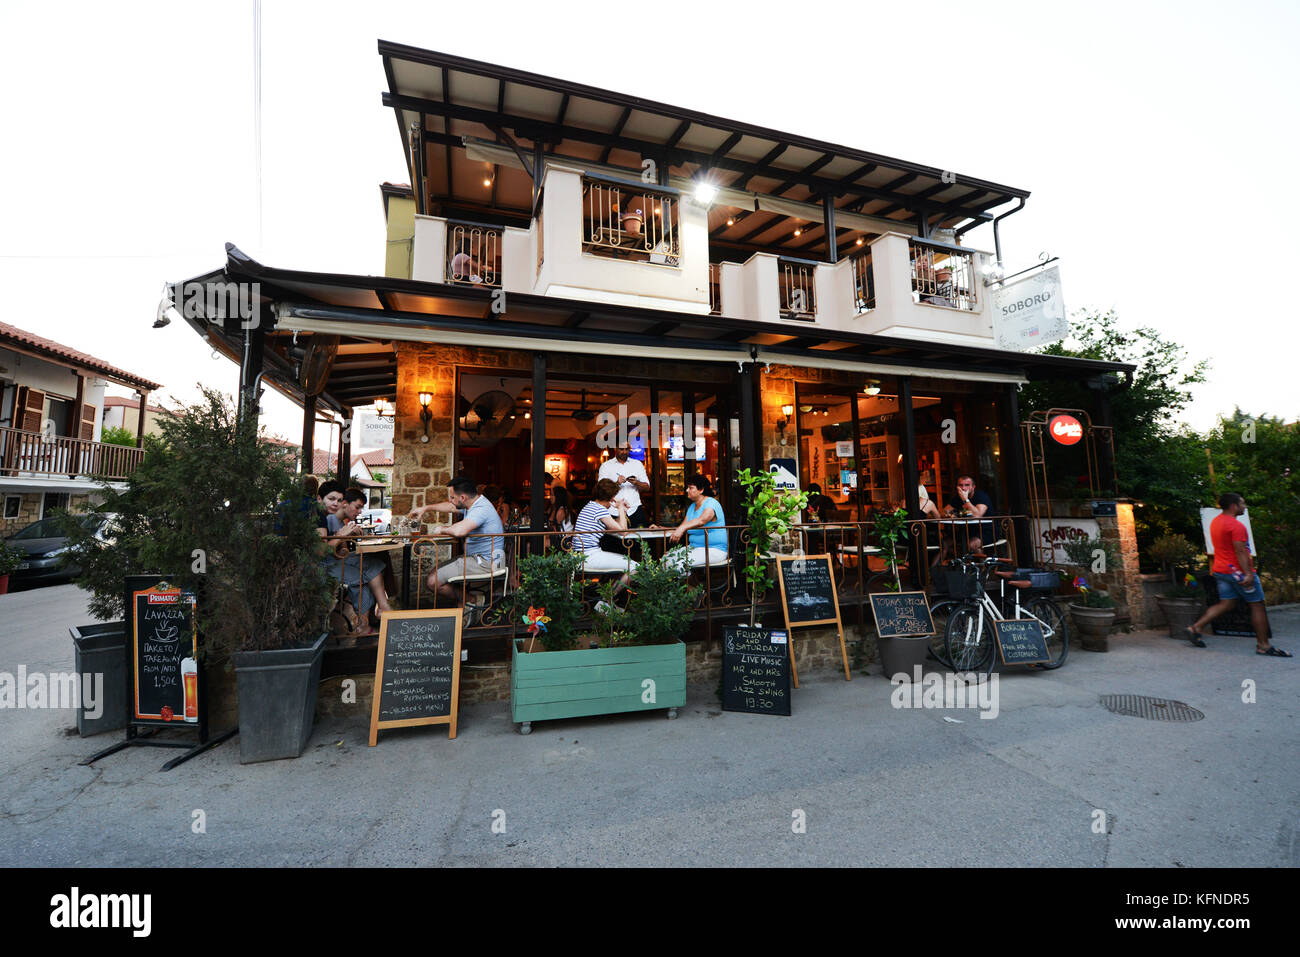 The popular Soboro beer bar & restaurant in the Village of Afytos, Greece. Stock Photo